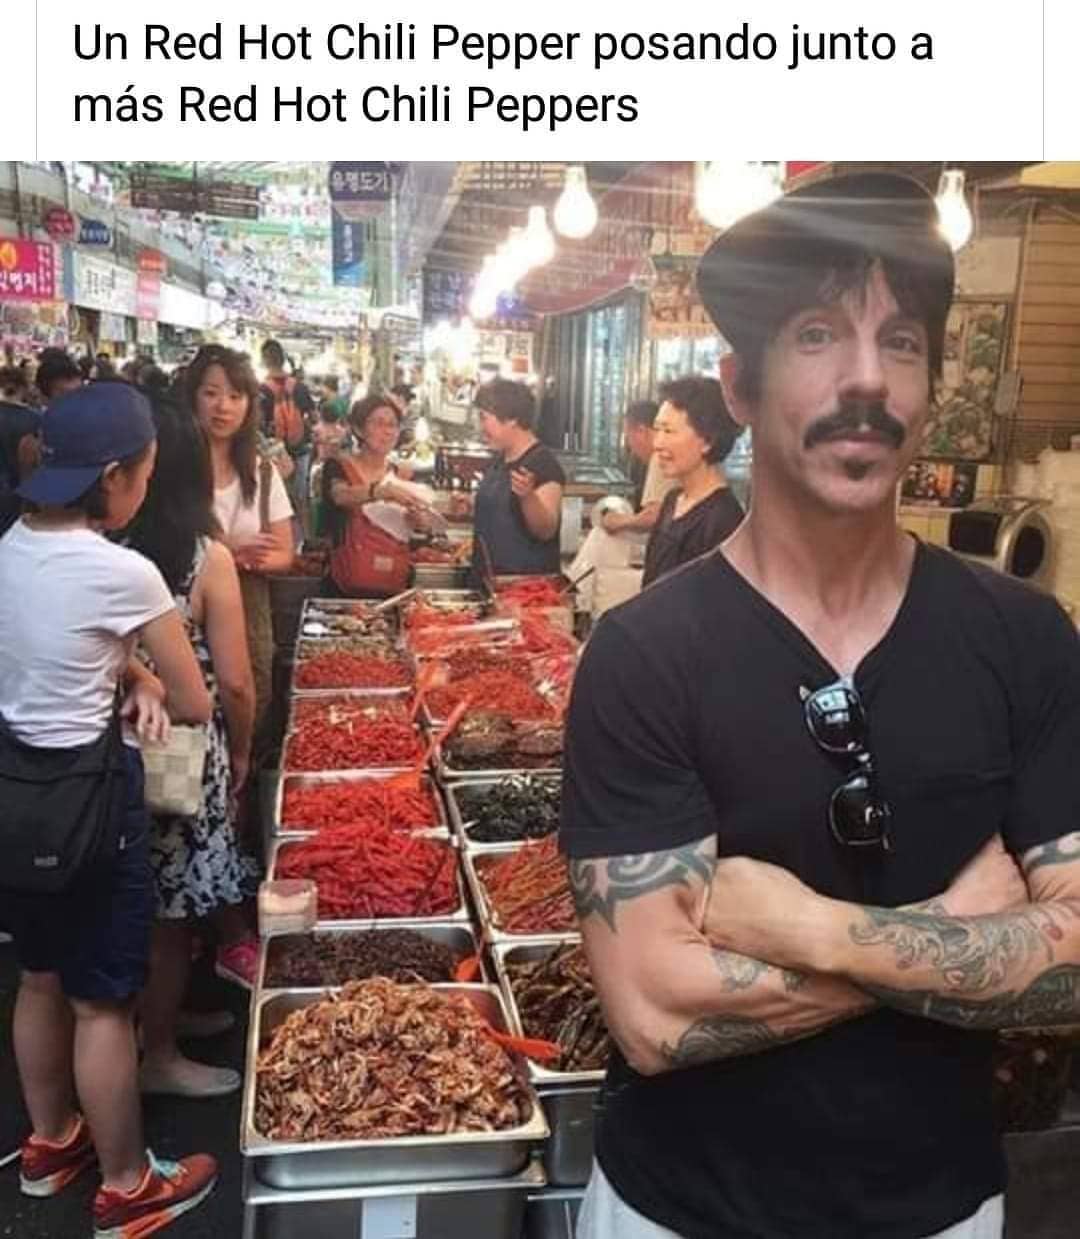 Un Red Hot Chili Pepper posando junto a más Red Hot Chili Peppers.